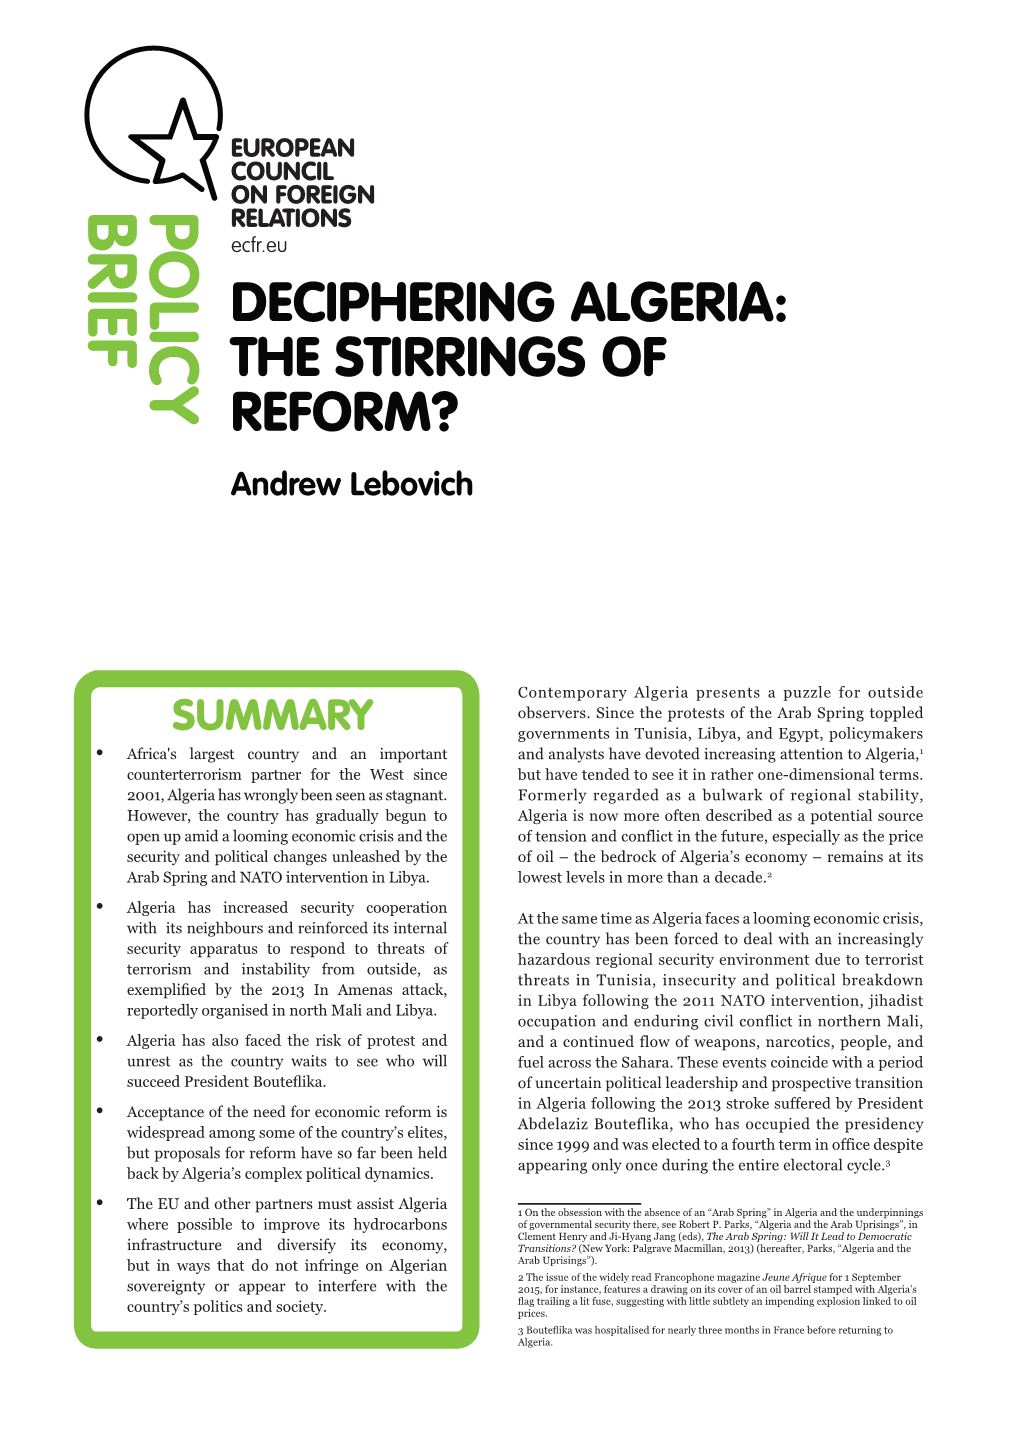 DECIPHERING ALGERIA: the STIRRINGS of REFORM? Relations in the Future